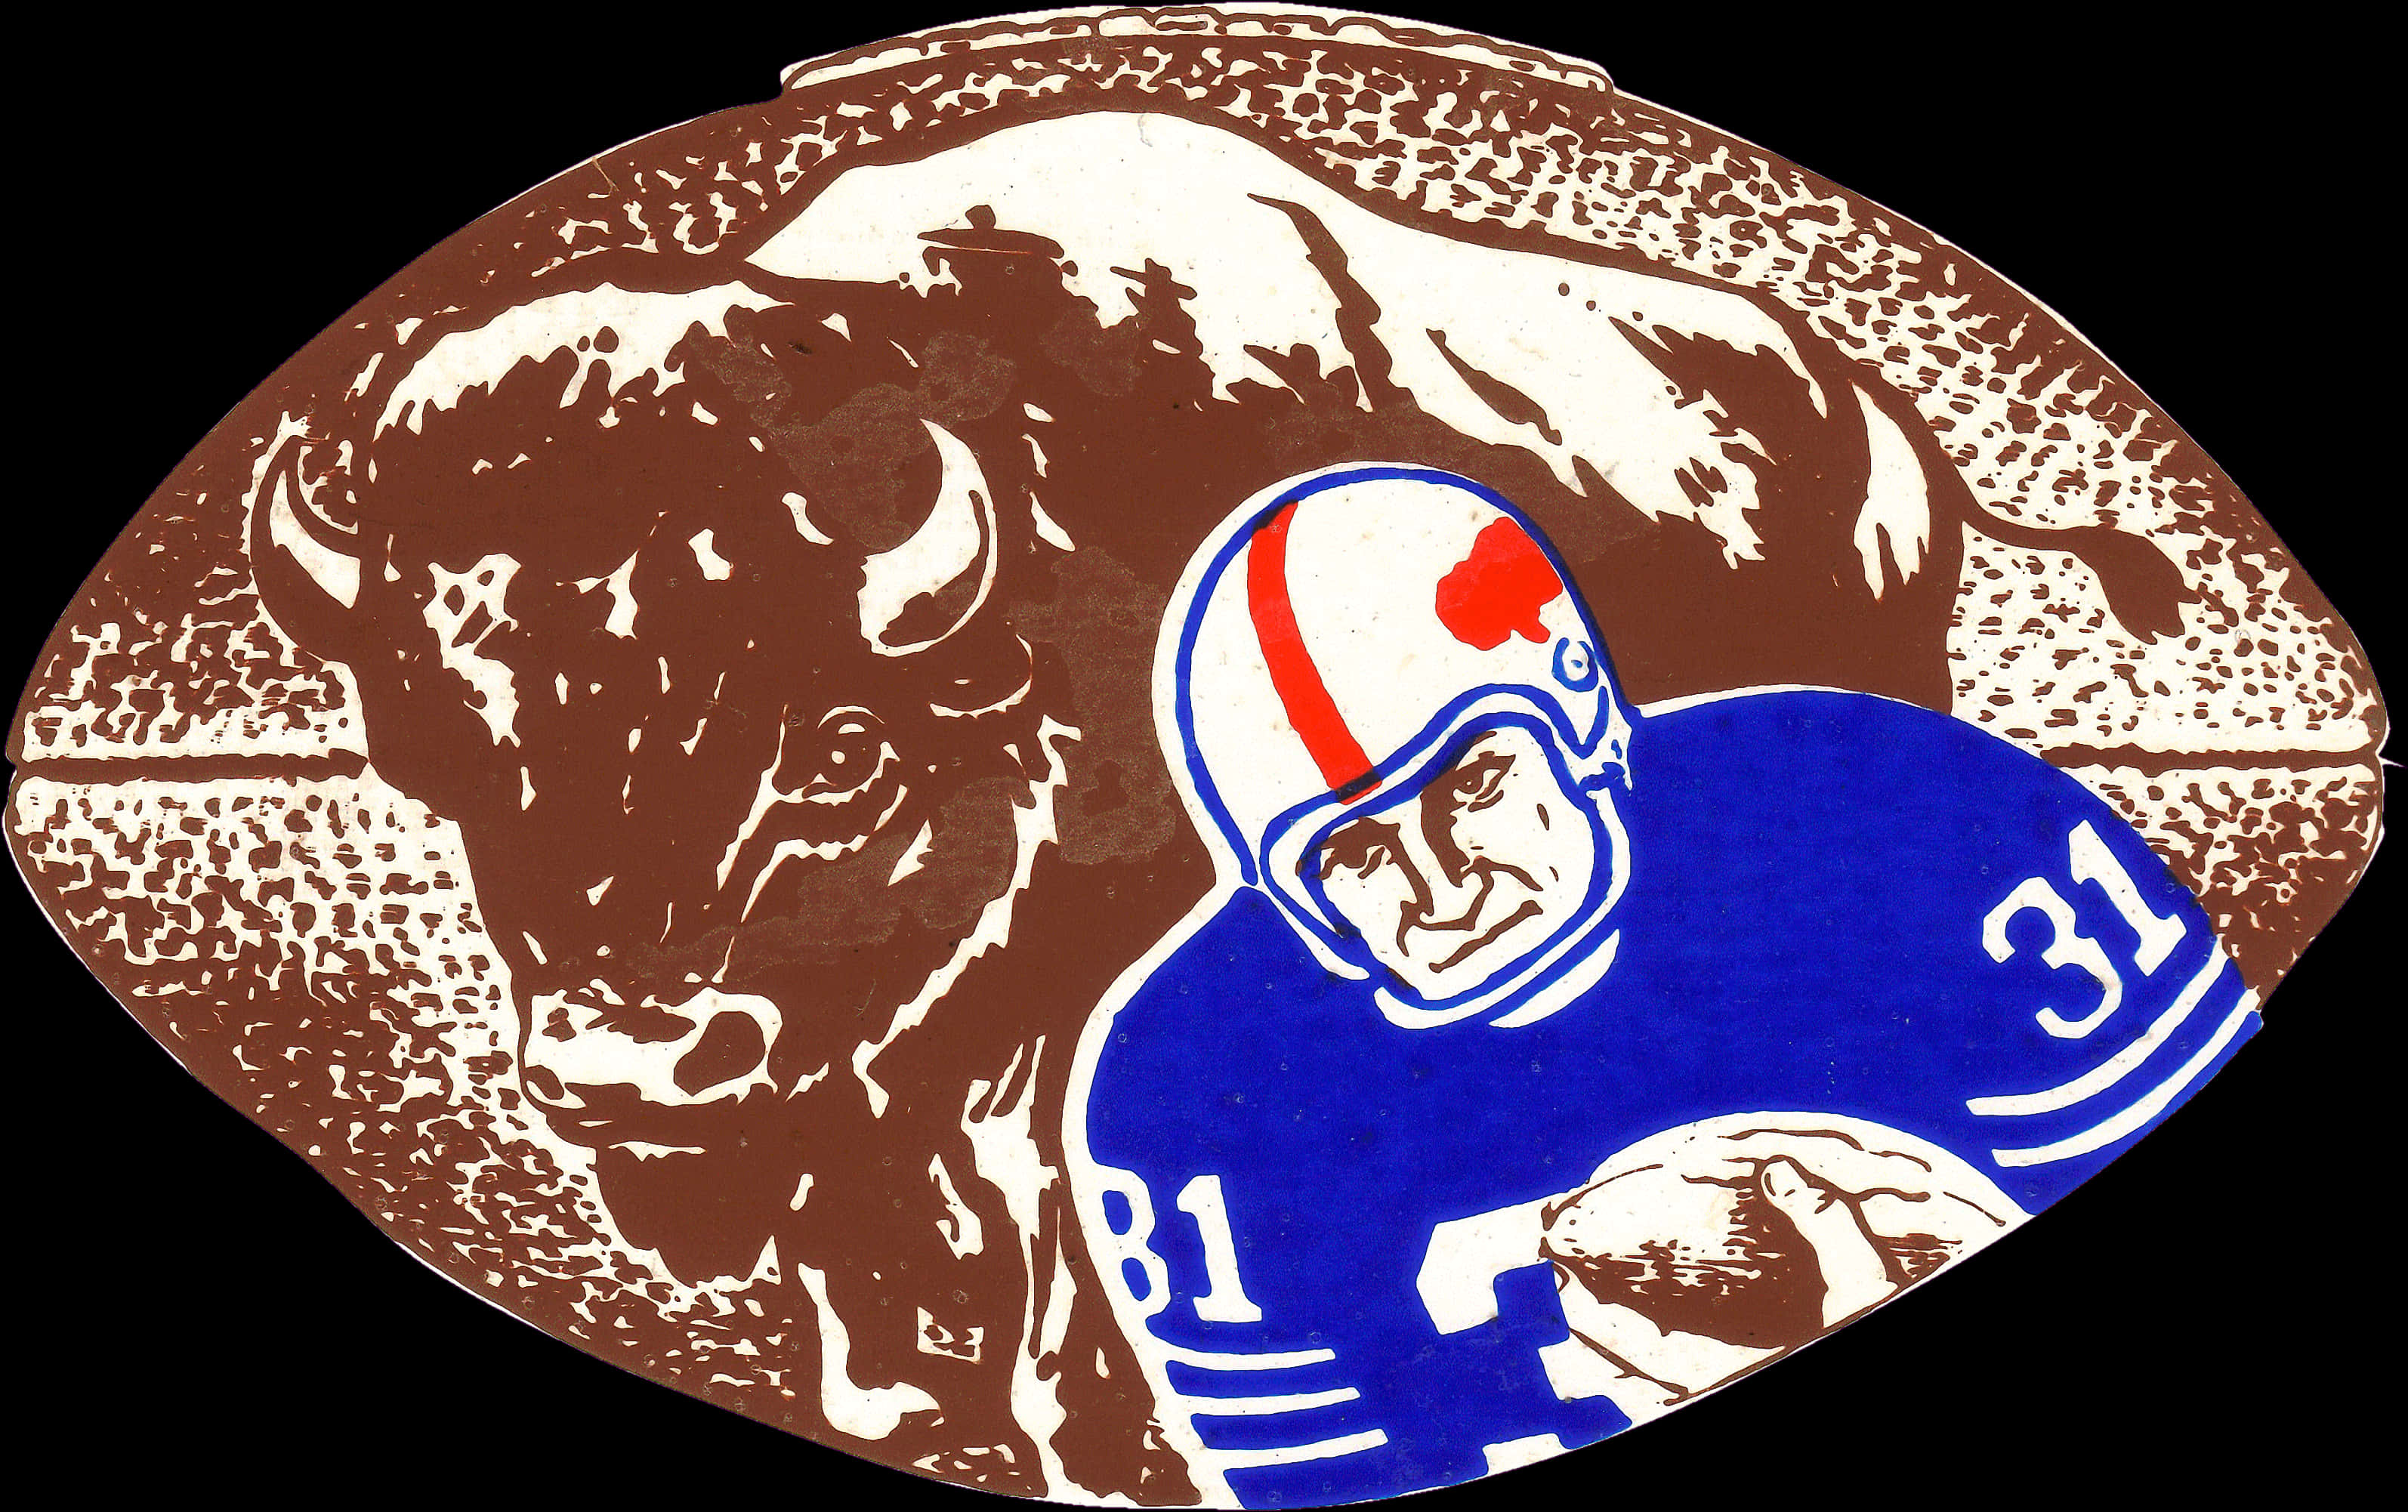 Vintage Football Playerand Buffalo Illustration PNG image